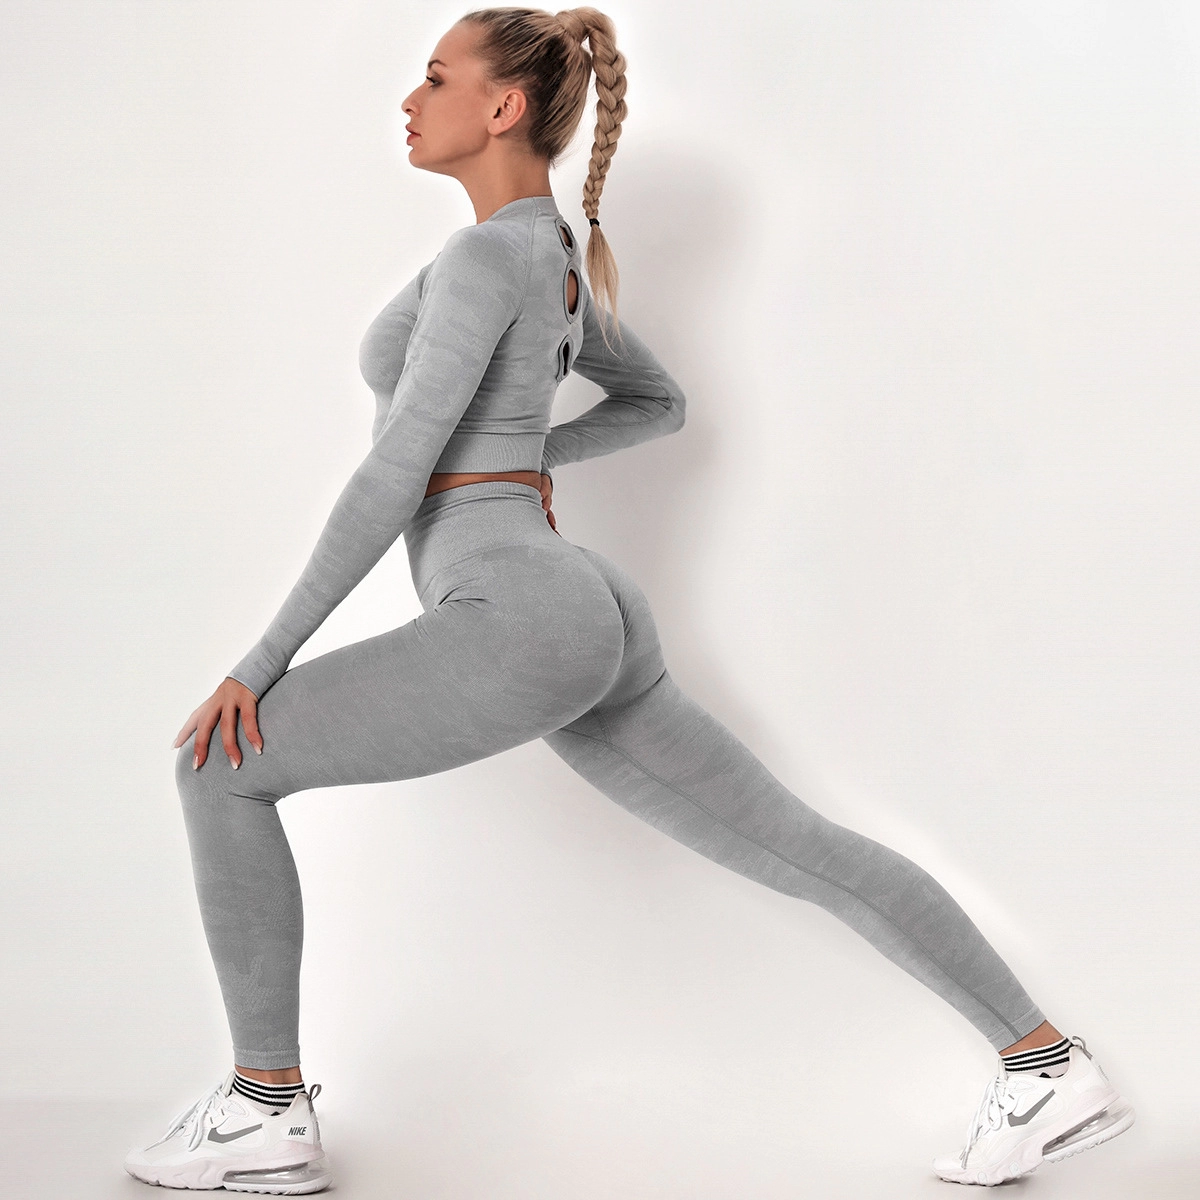 workout clothing sport Gym athleisure High Waist Fitness leggings Women Yoga Pants